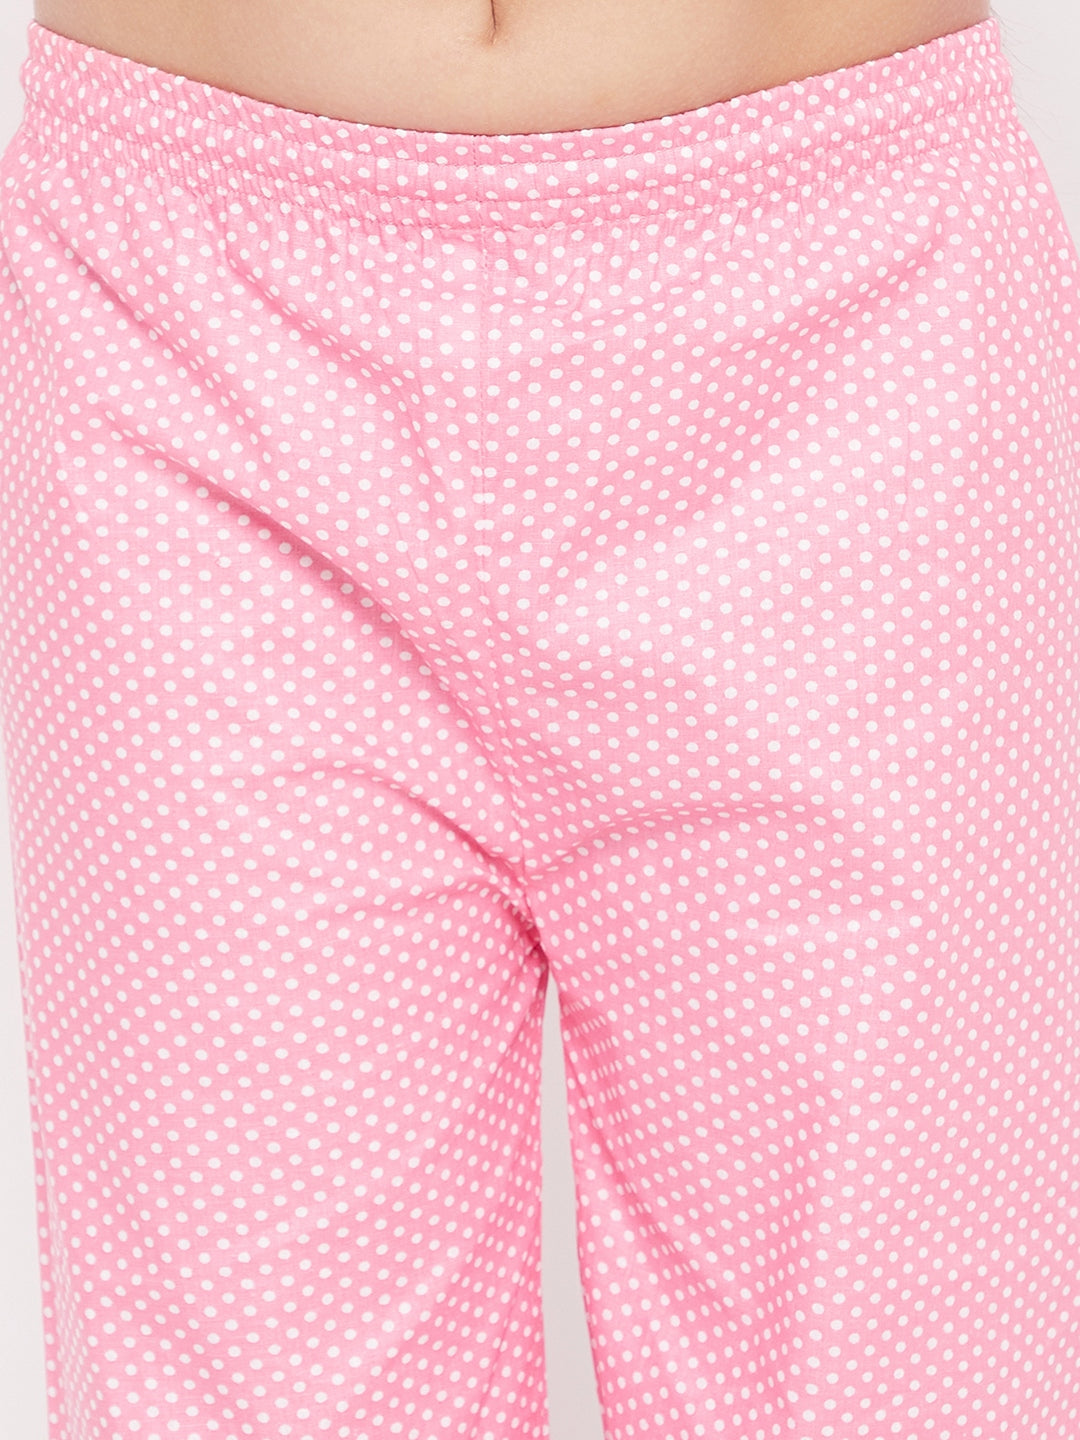 Girl's Pink Polka Dot Cotton Nightsuit  - NOZ2TOZ KIDS